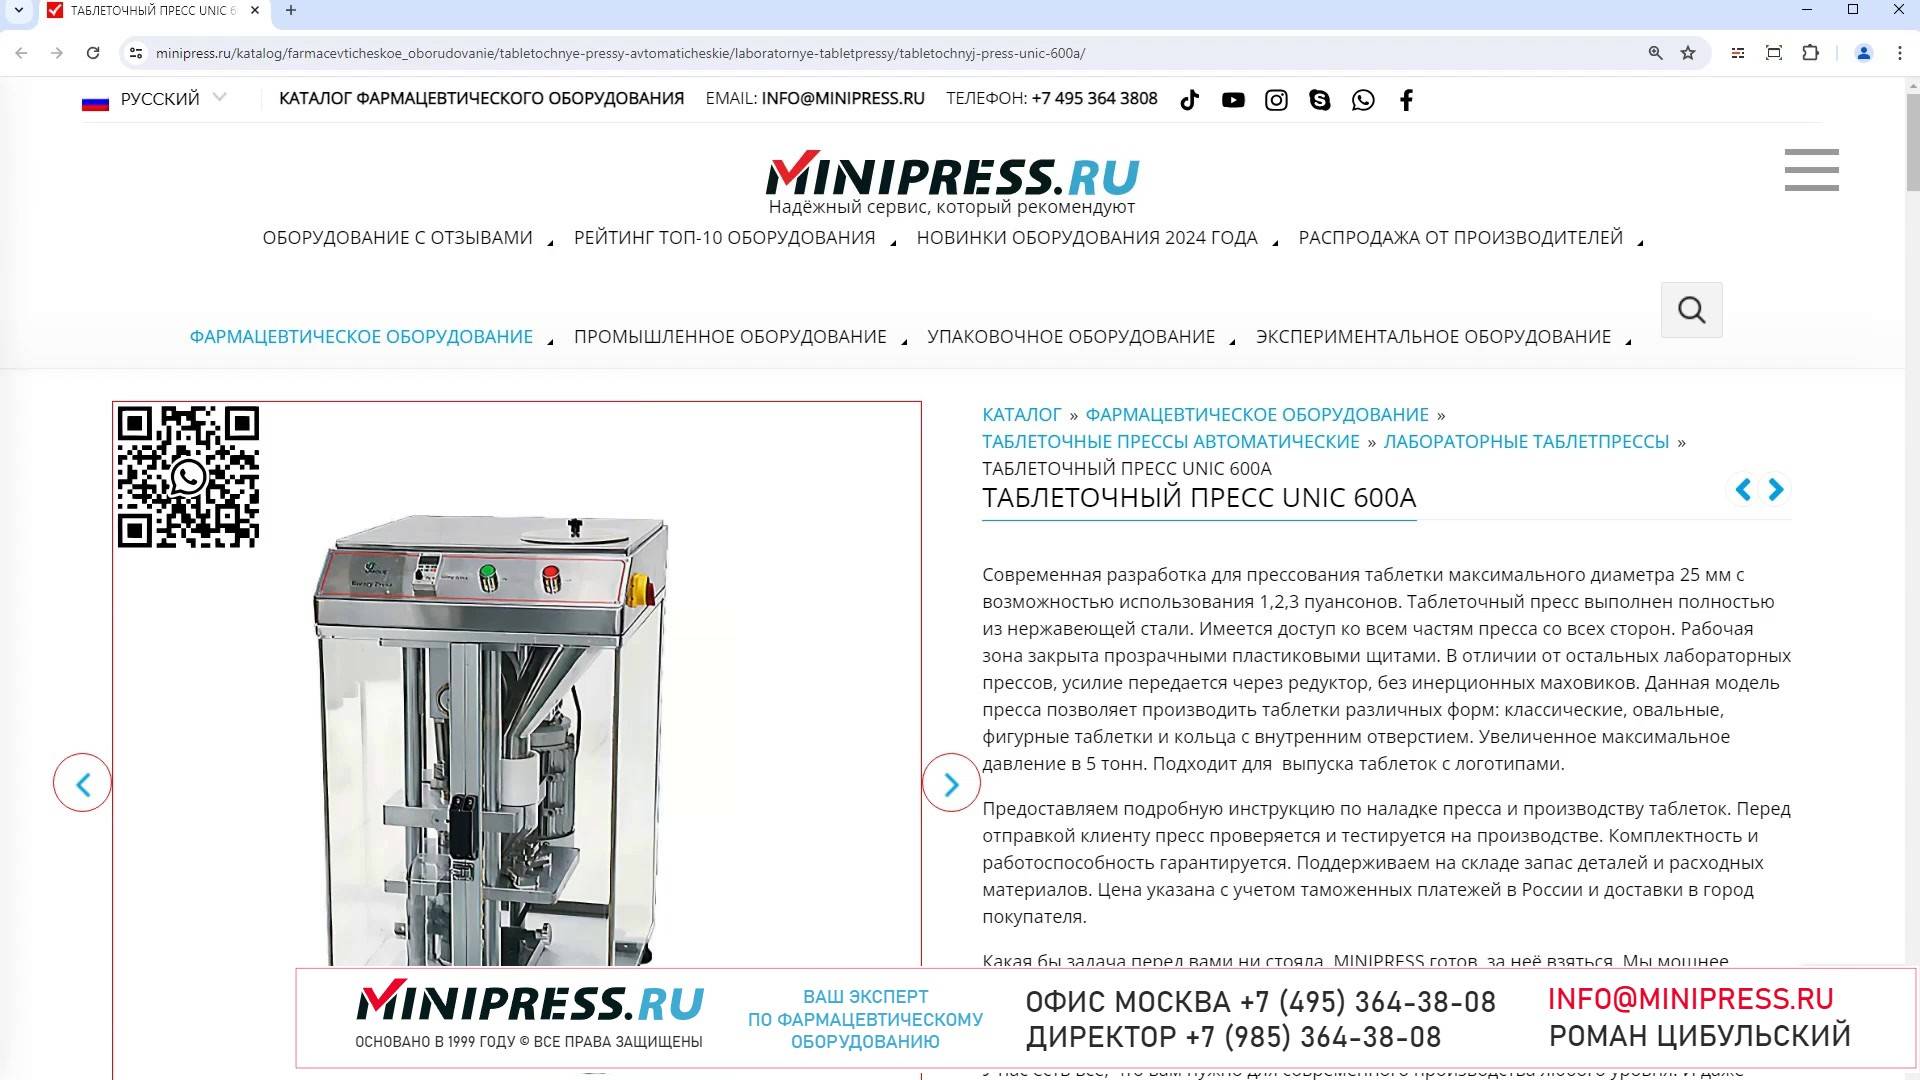 Minipress.ru Таблеточный пресс UNIC 600A